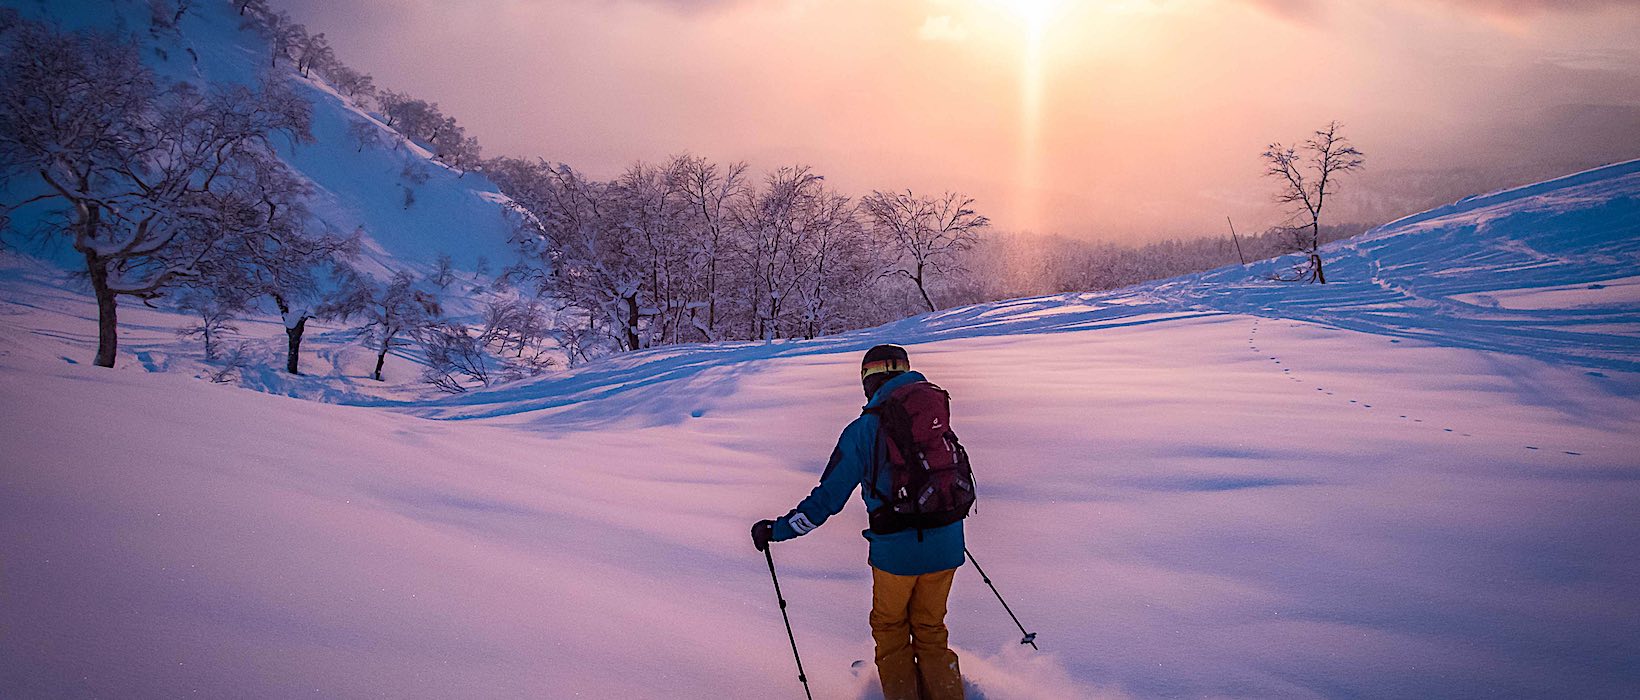 Sunset skiing in Japan